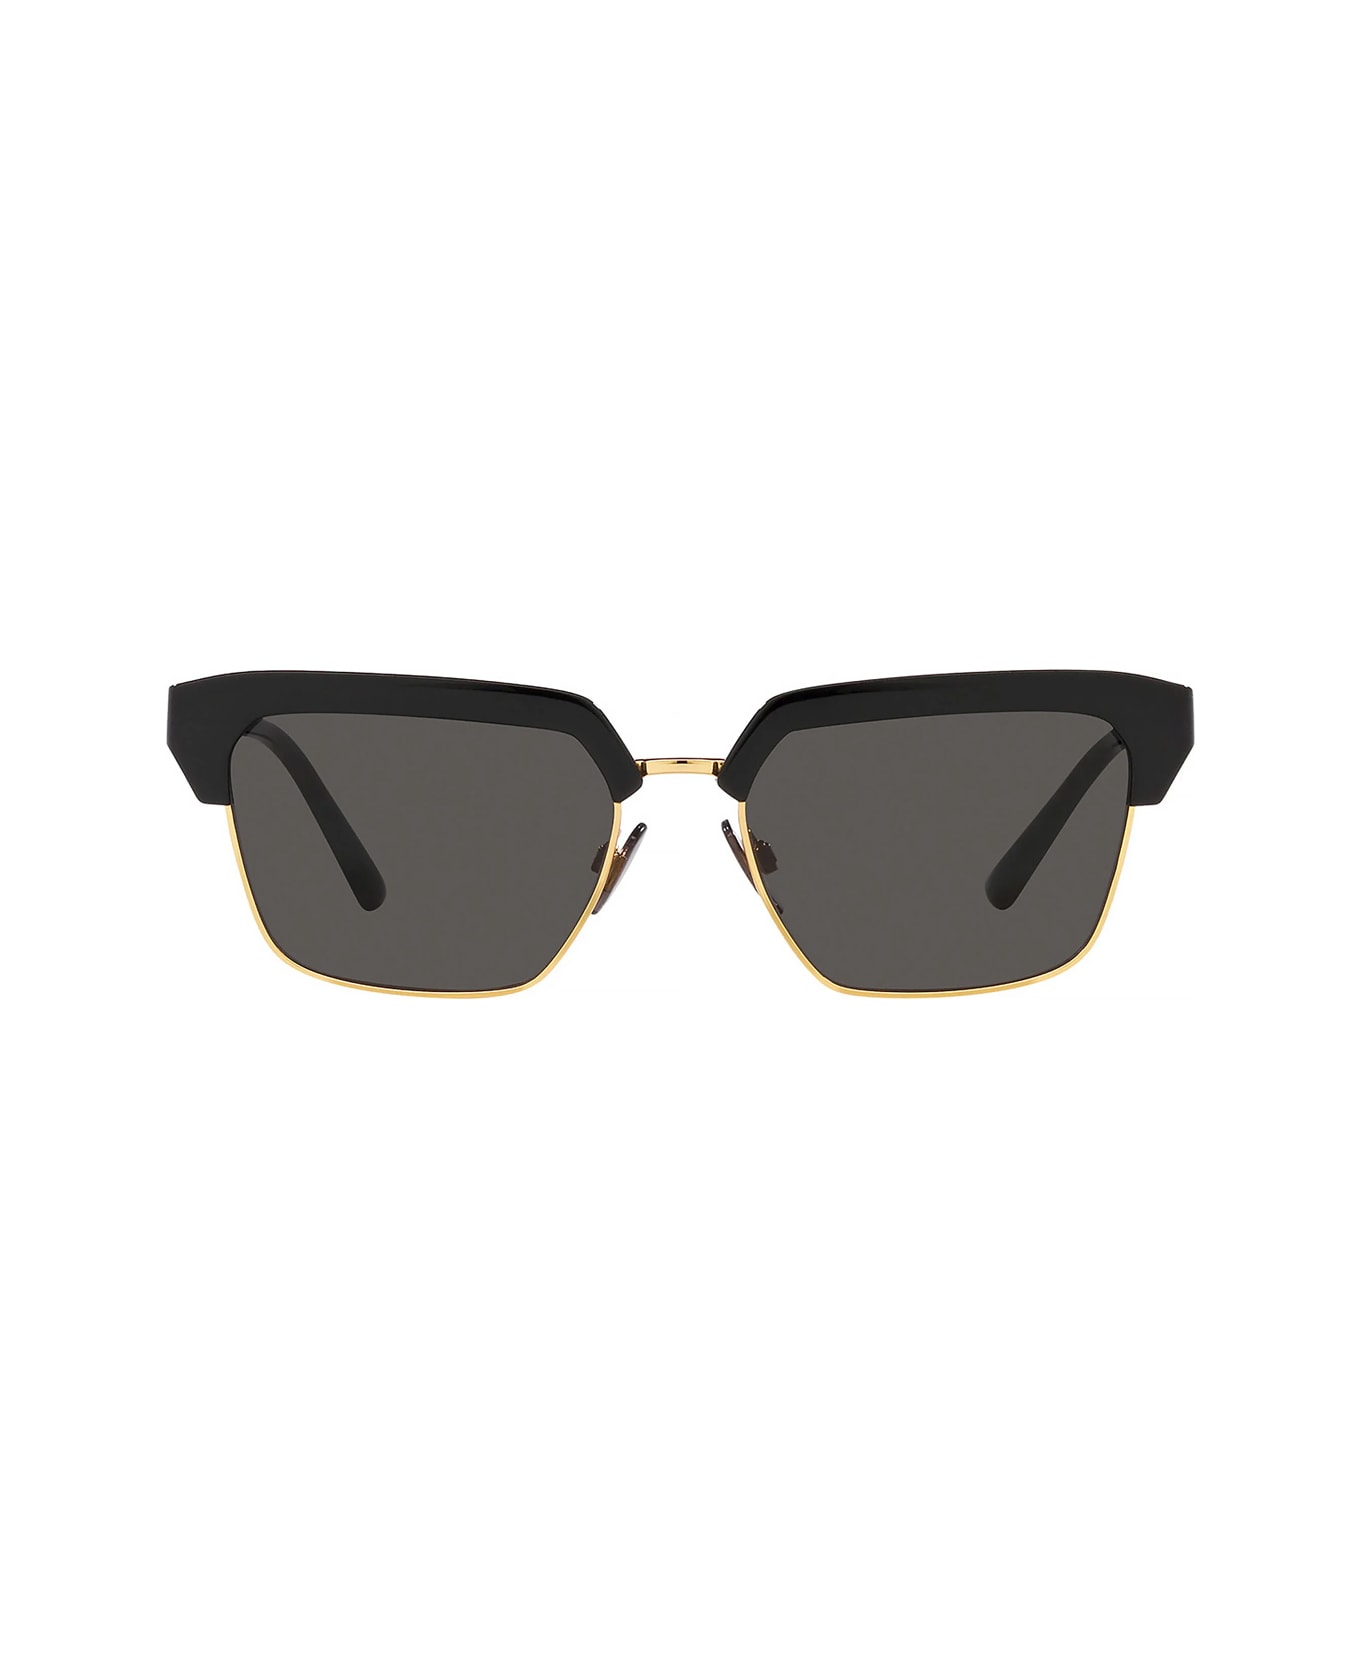 Dolce & Gabbana Eyewear Dg6185 501/87 Sunglasses - Nero サングラス